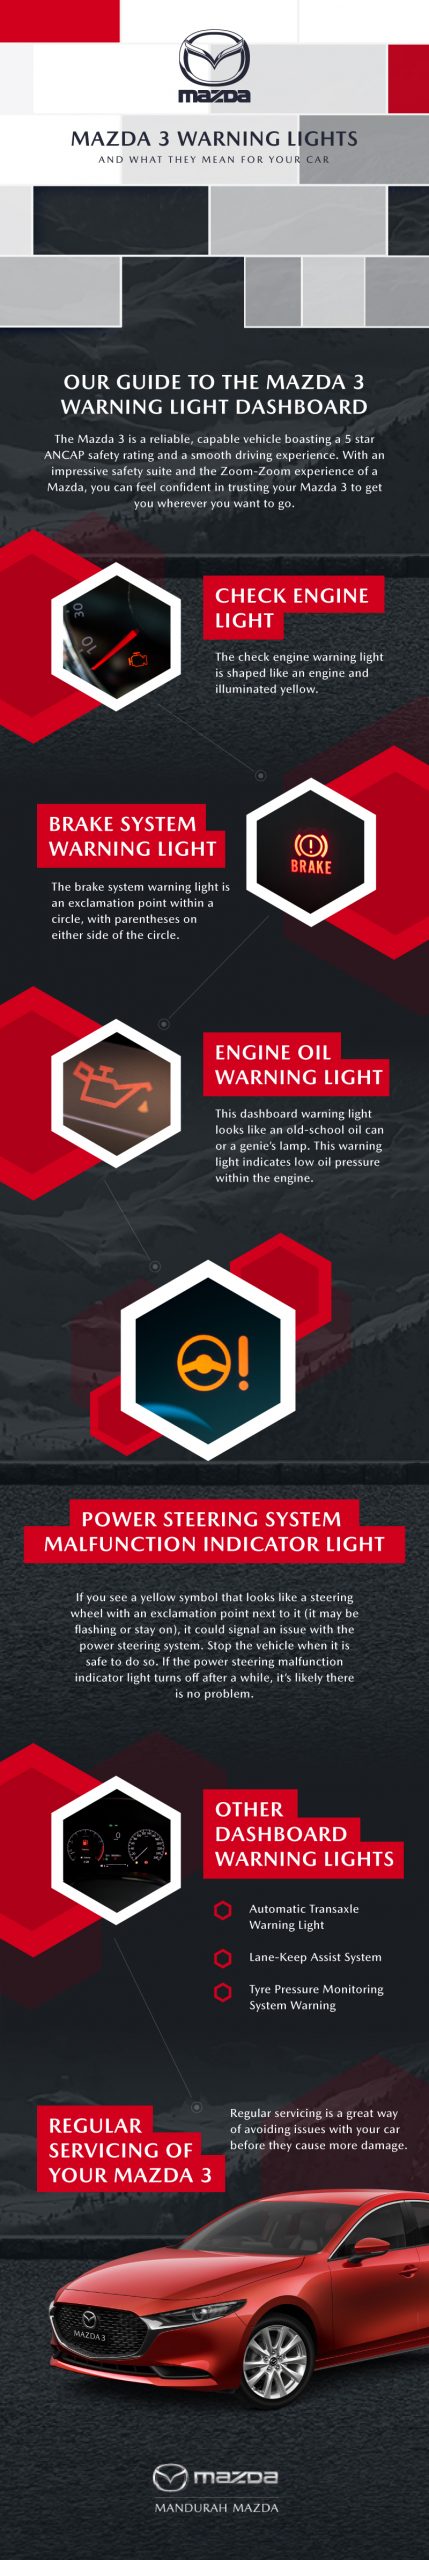 Mazda 3 warning lights